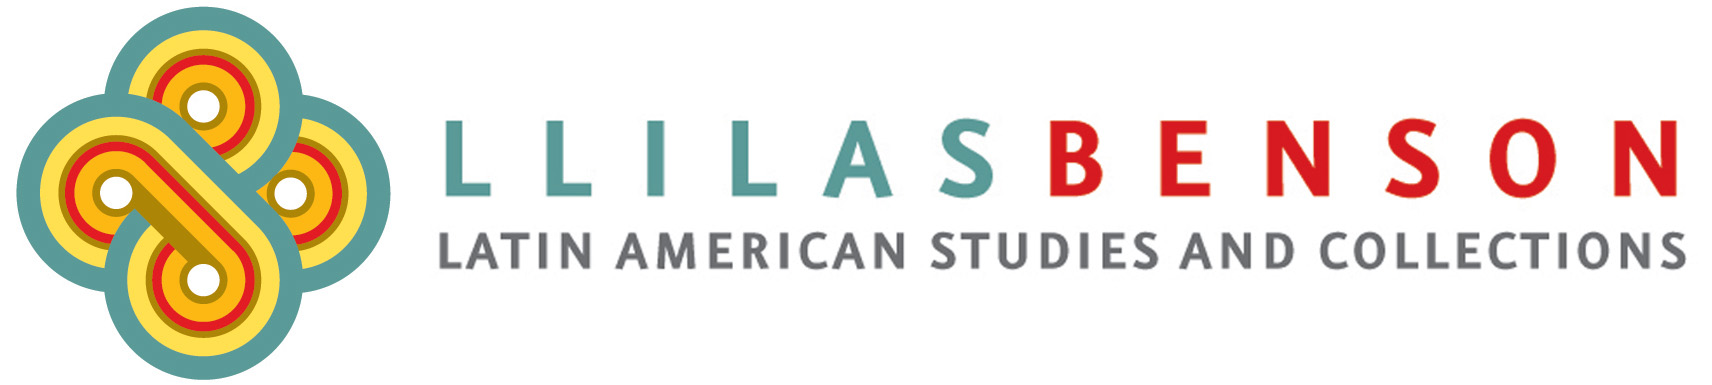 LLILAS Benson Latin American Studies and Collections